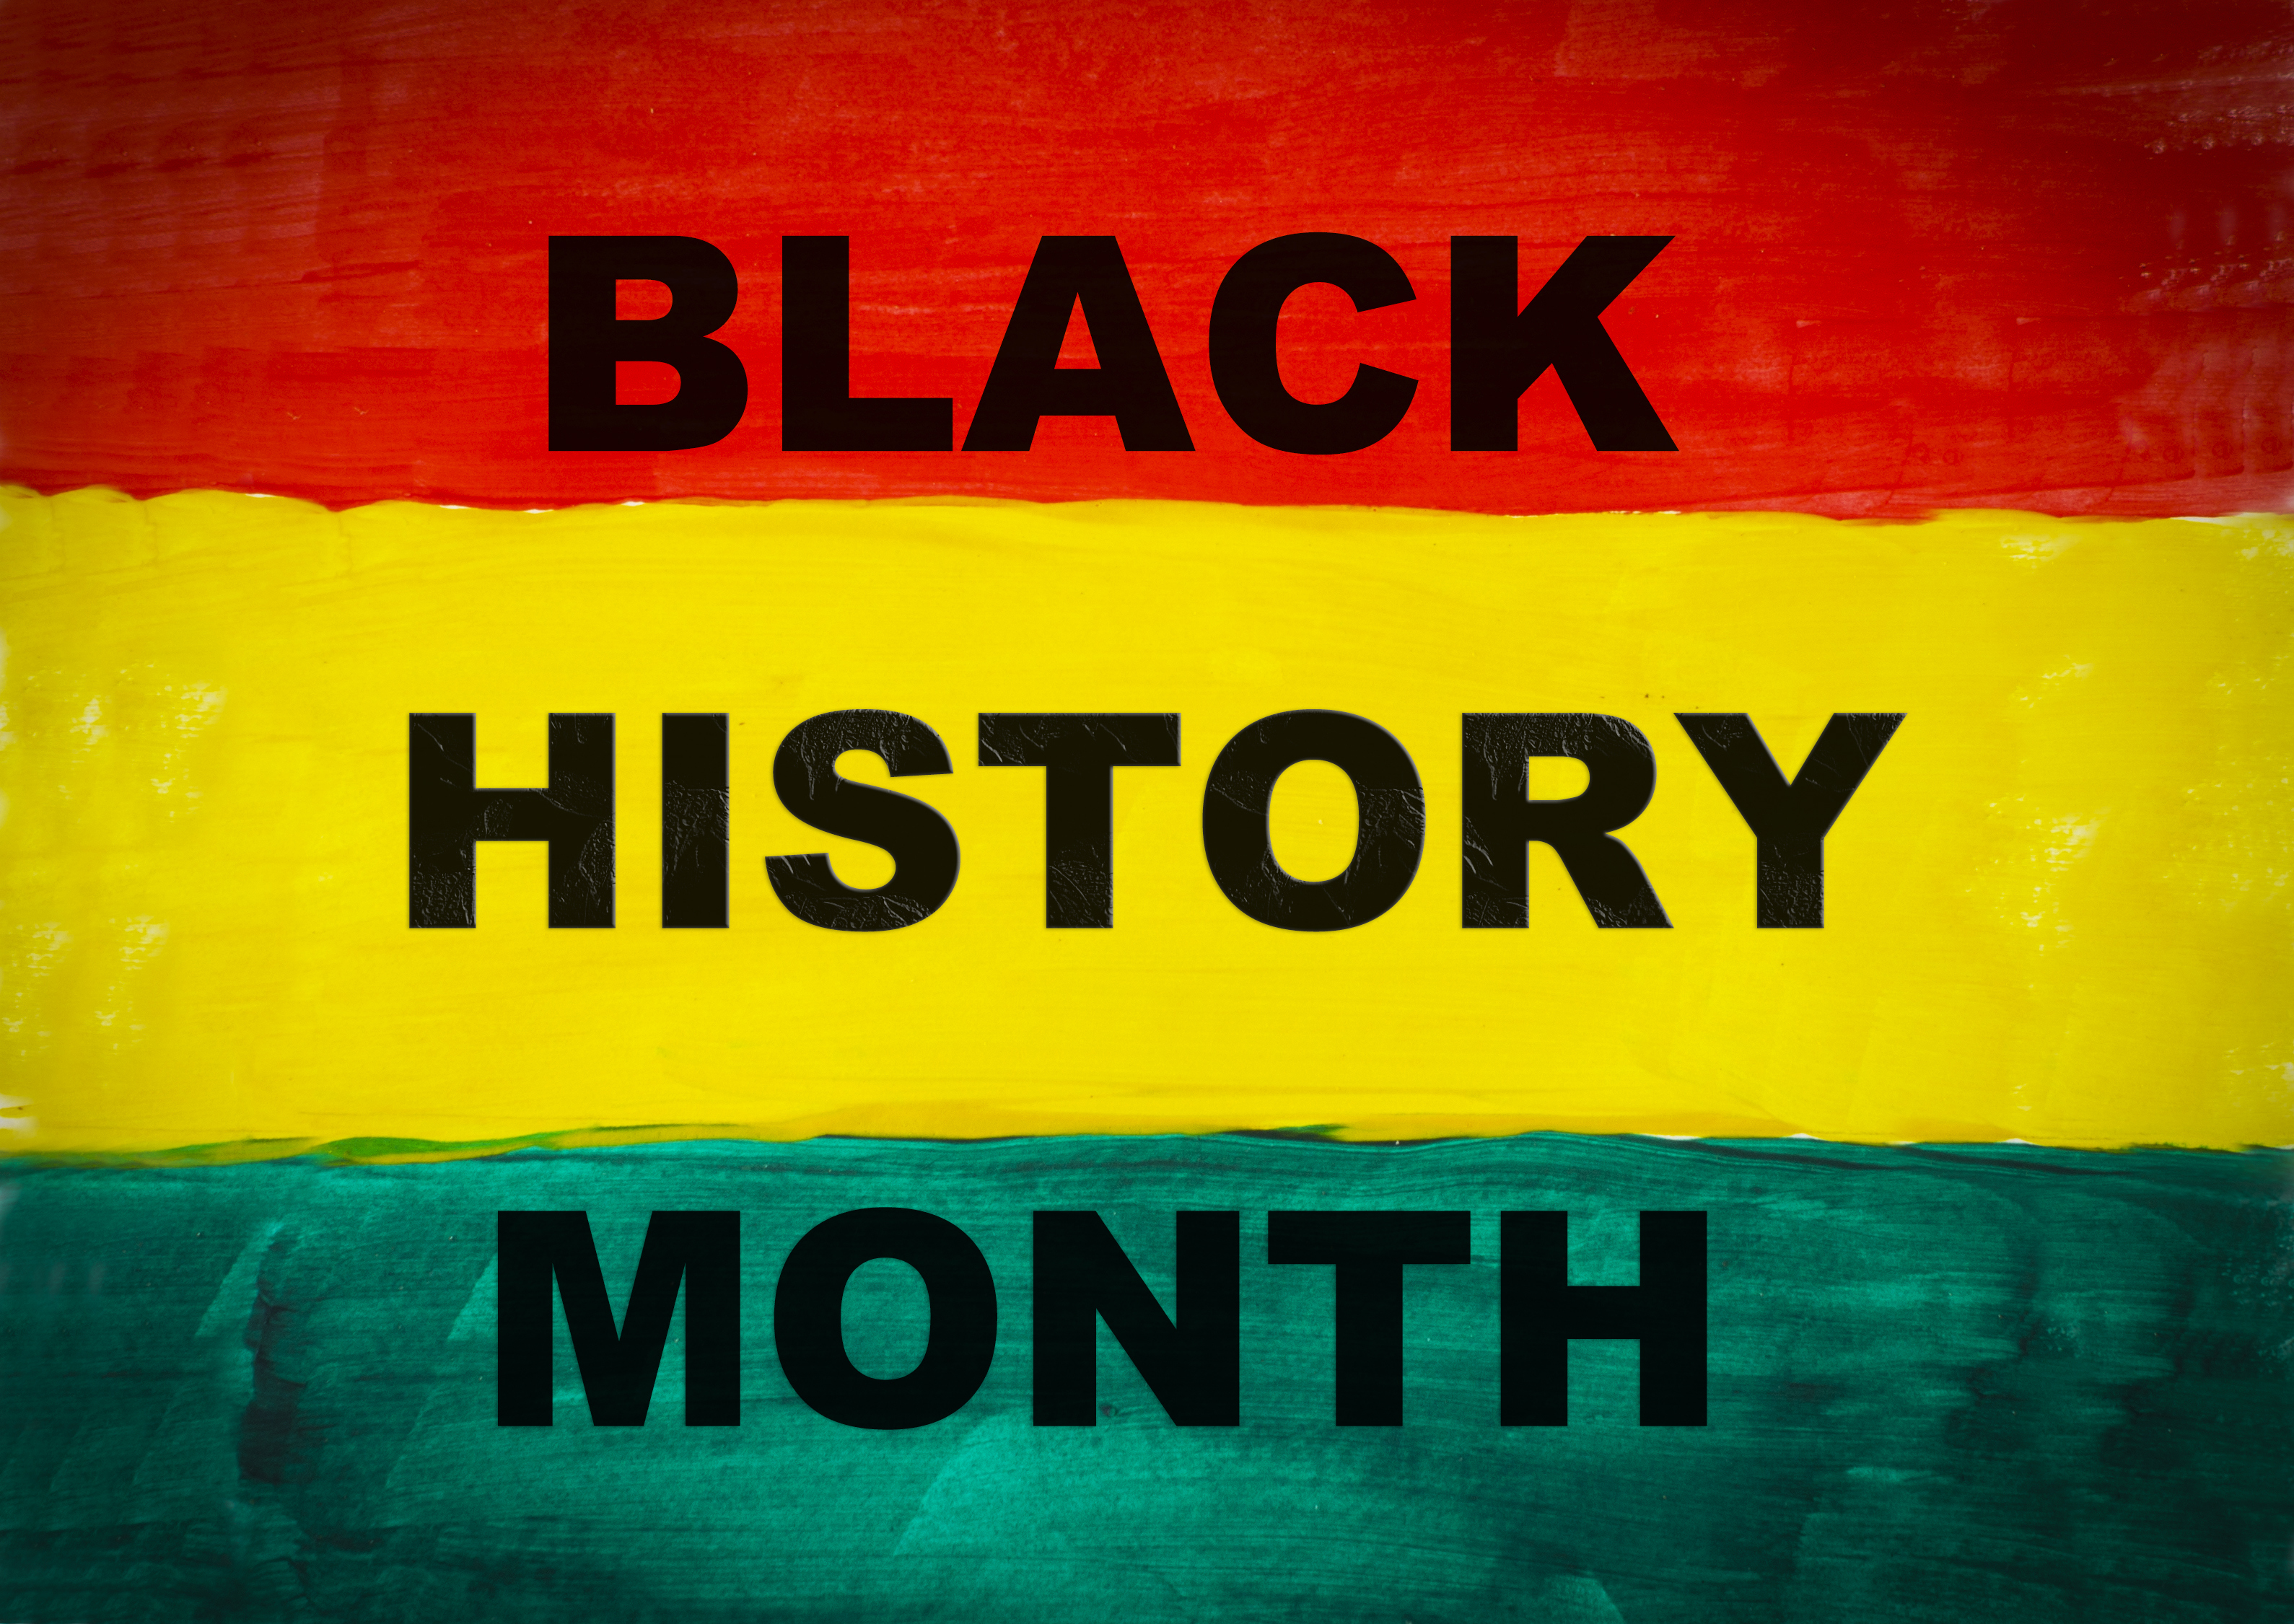 Black History Month colours